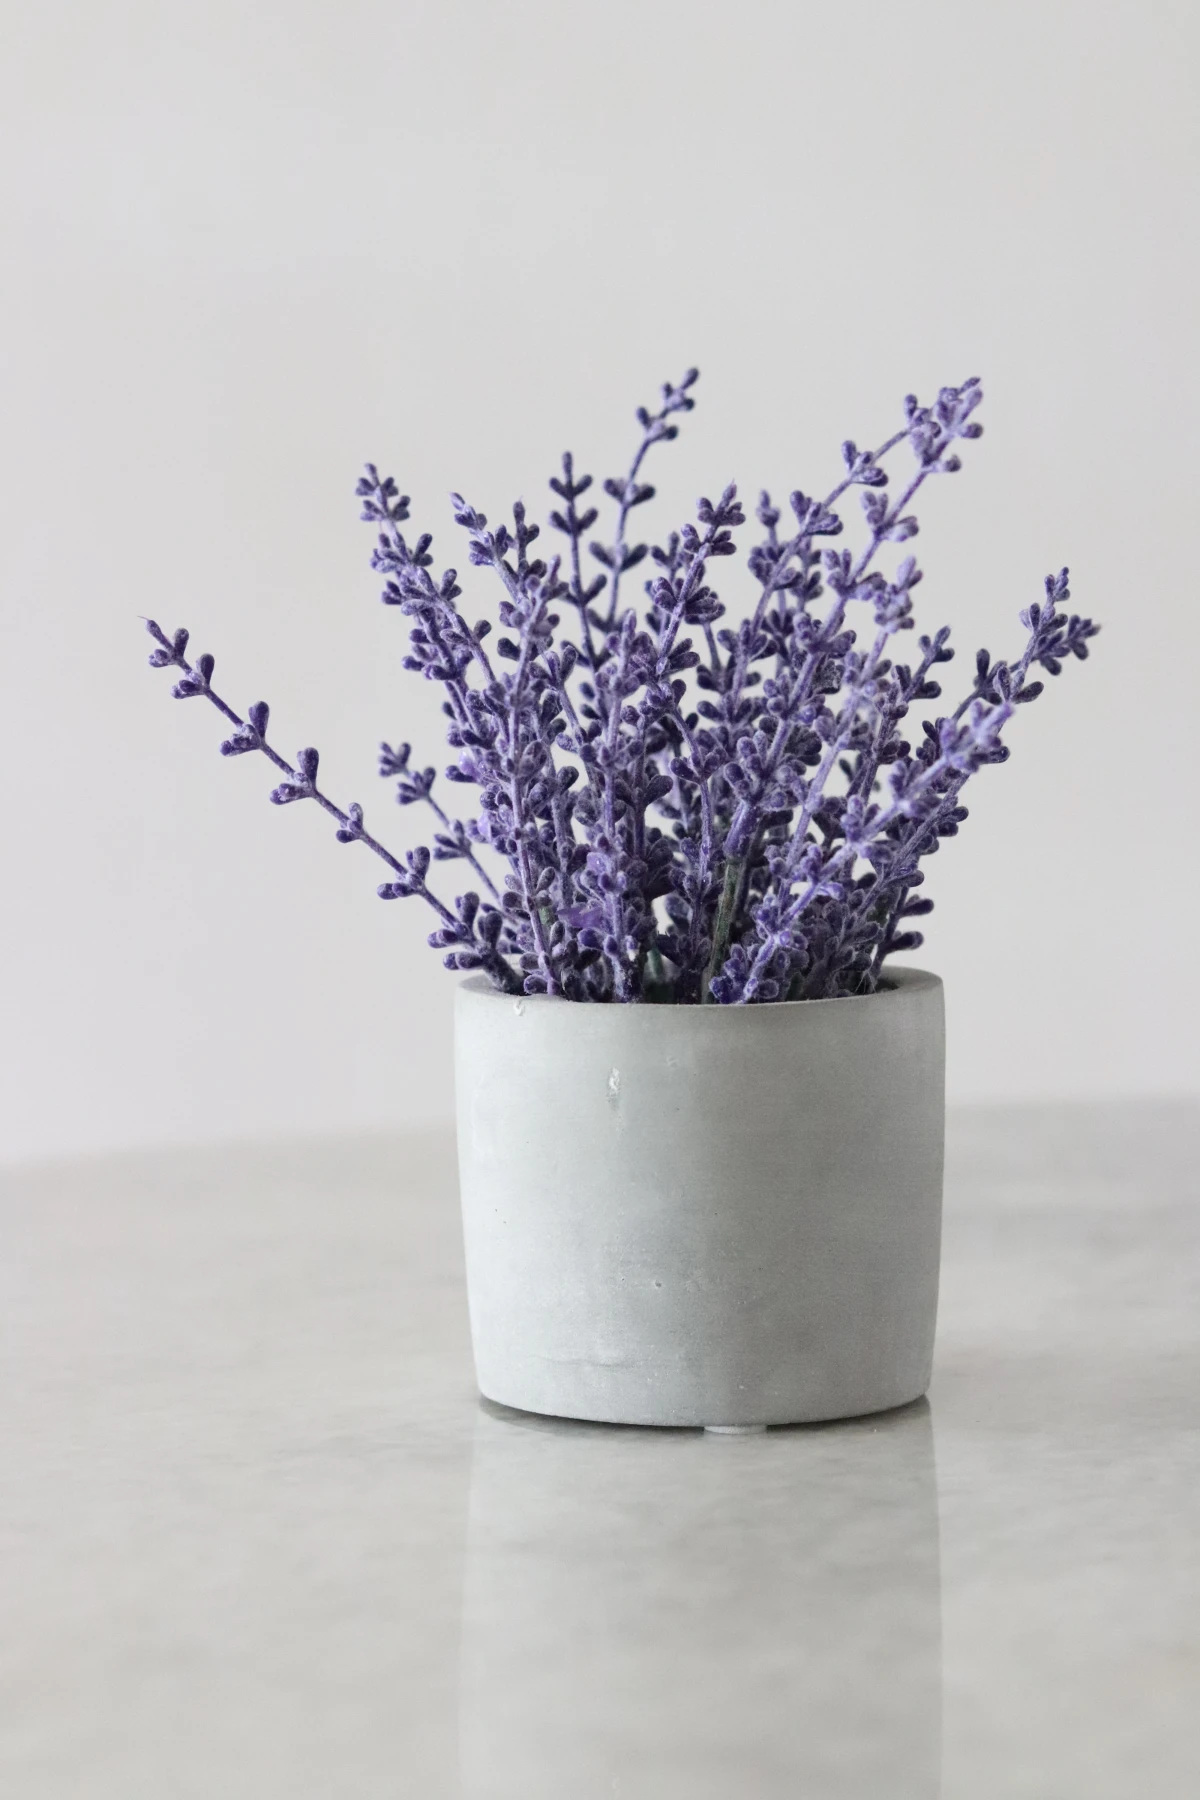 patio plants lavender in a gray pot